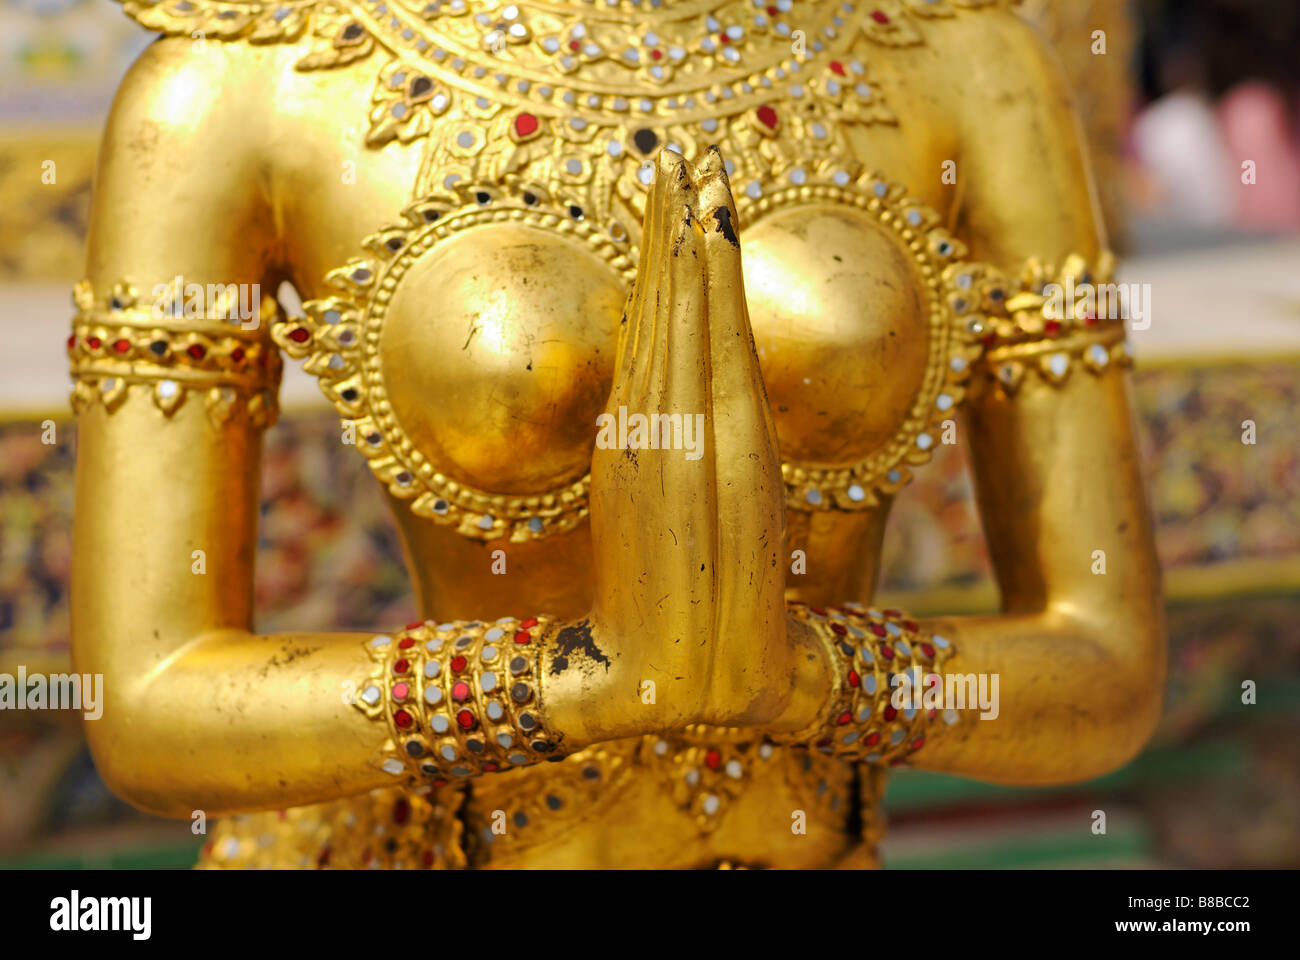 Goldene Kinnara-Statue bilden eine Handbewegung Wai - Wat Phra Kaew und dem Grand Palace in Bangkok Zentralthailand Stockfoto